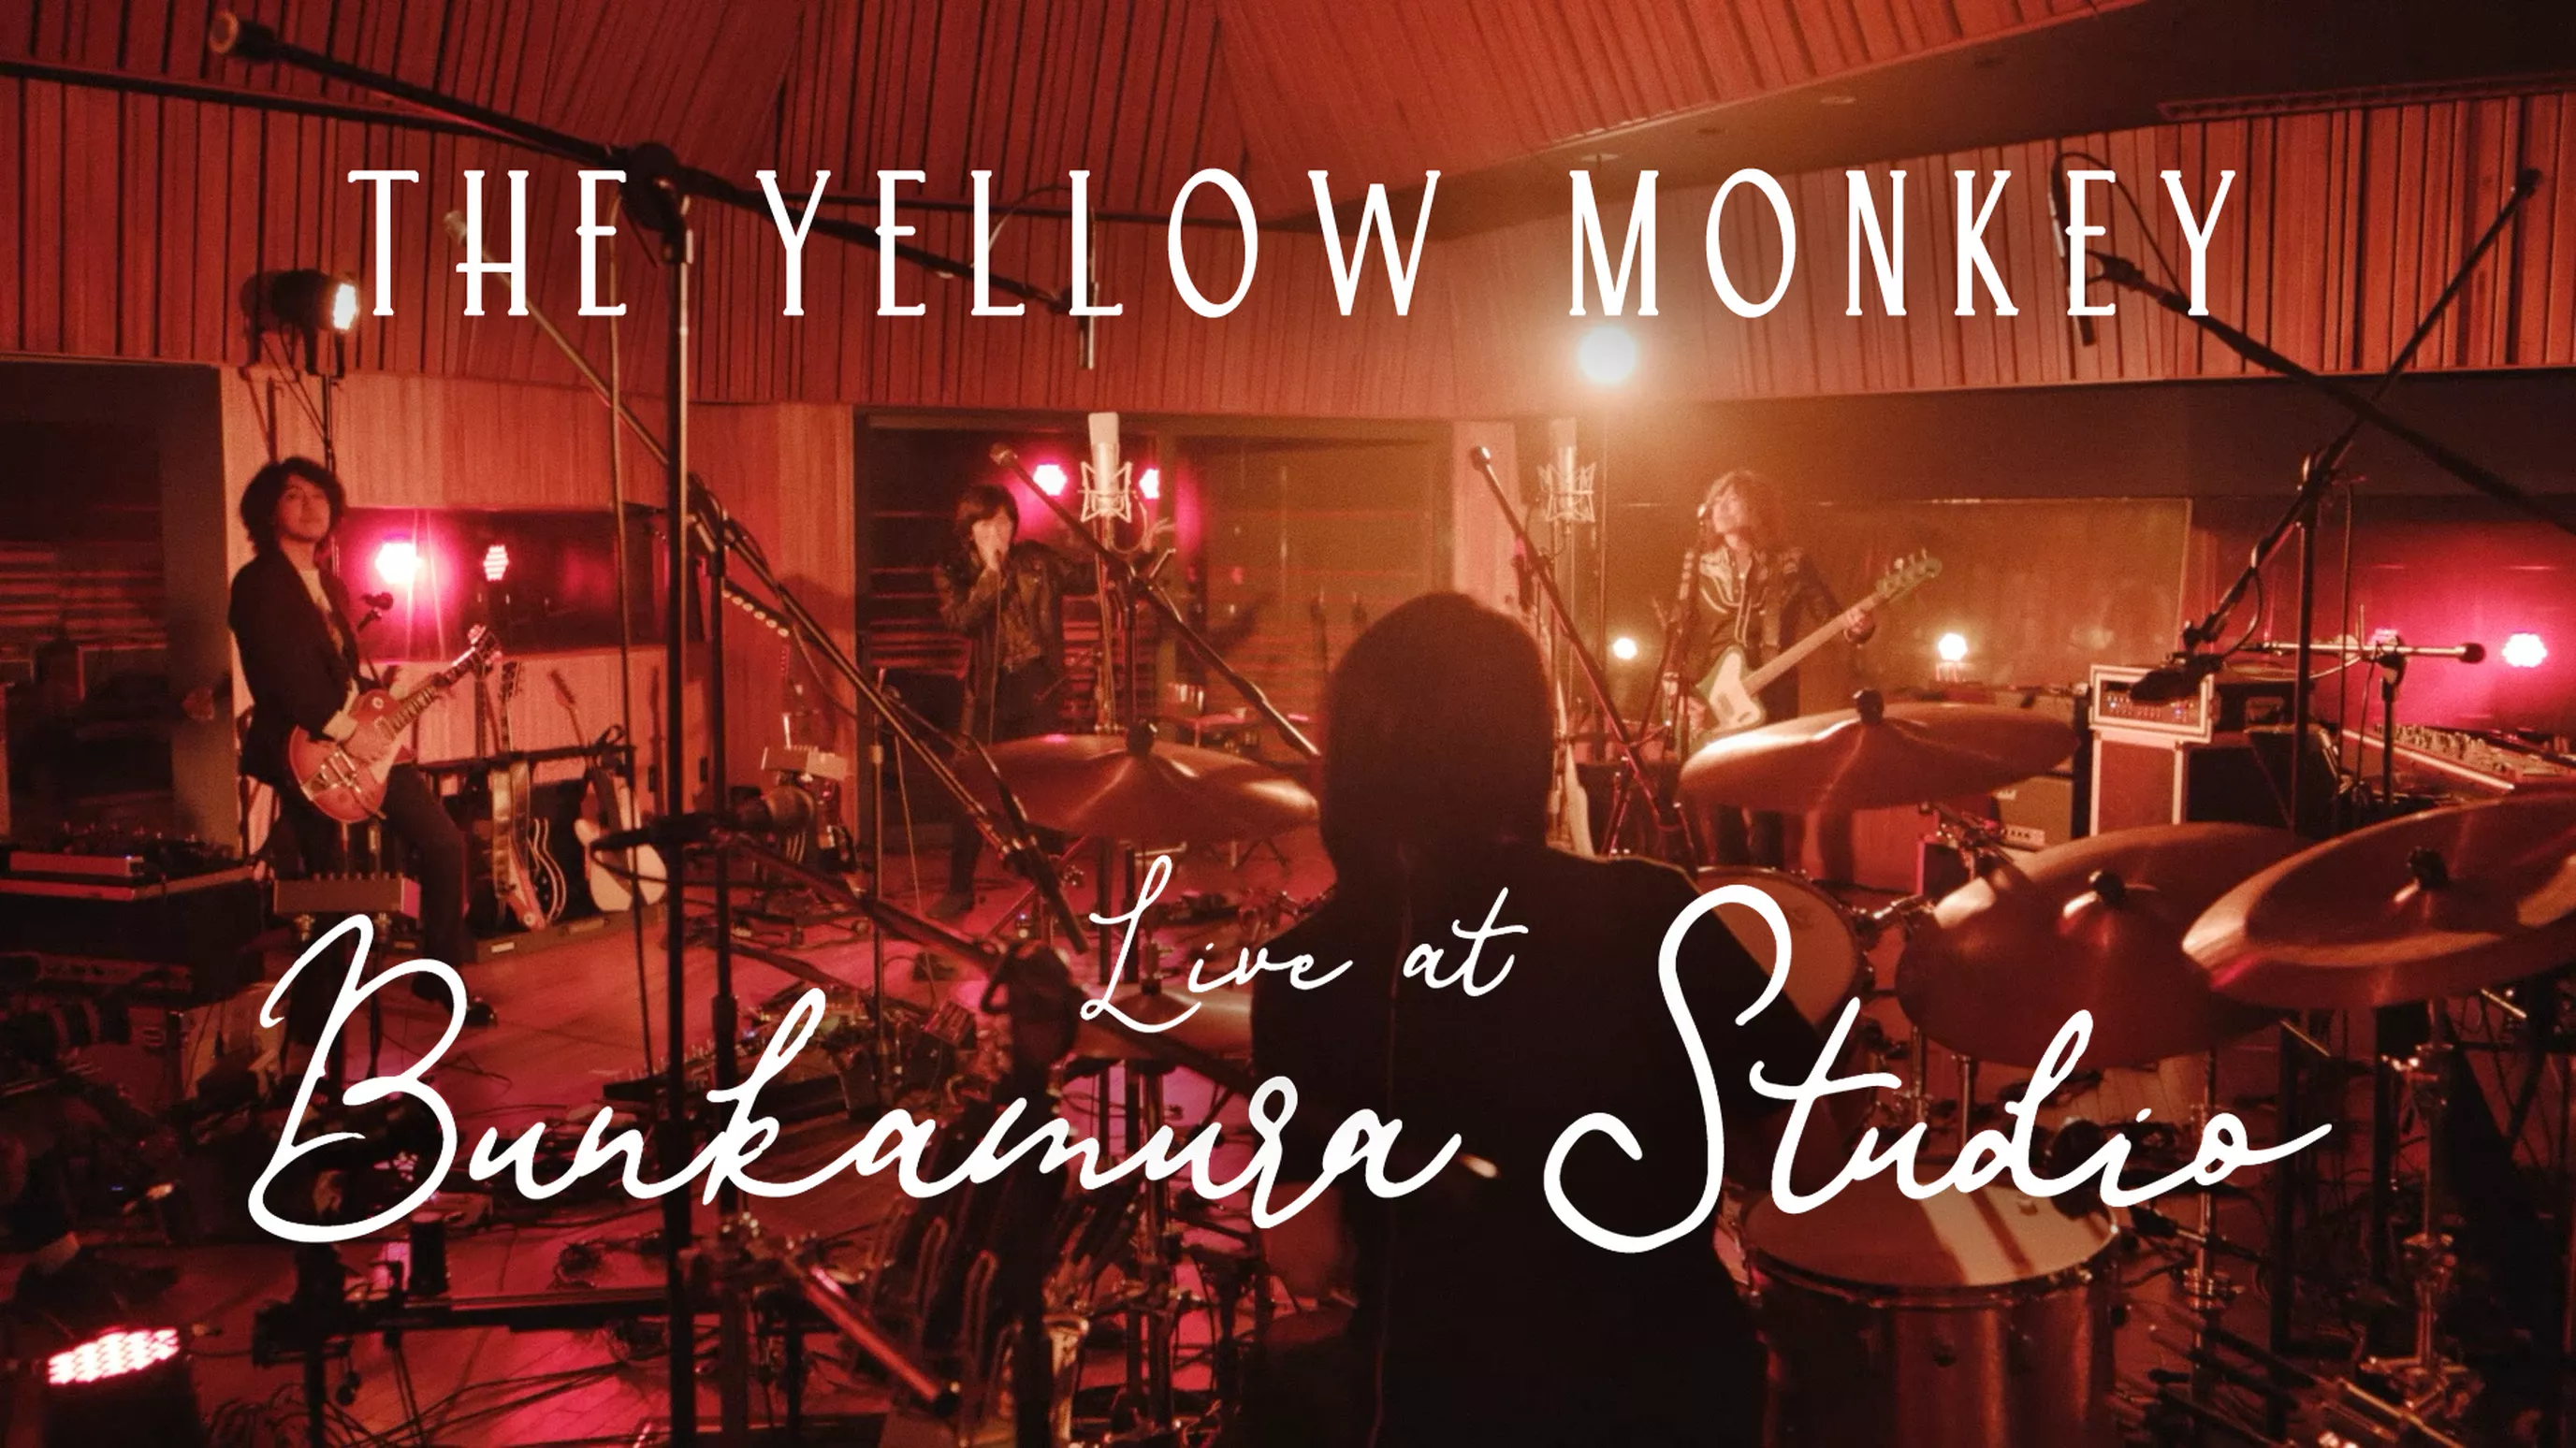 THE YELLOW MONKEY Live at Bunkamura Studio